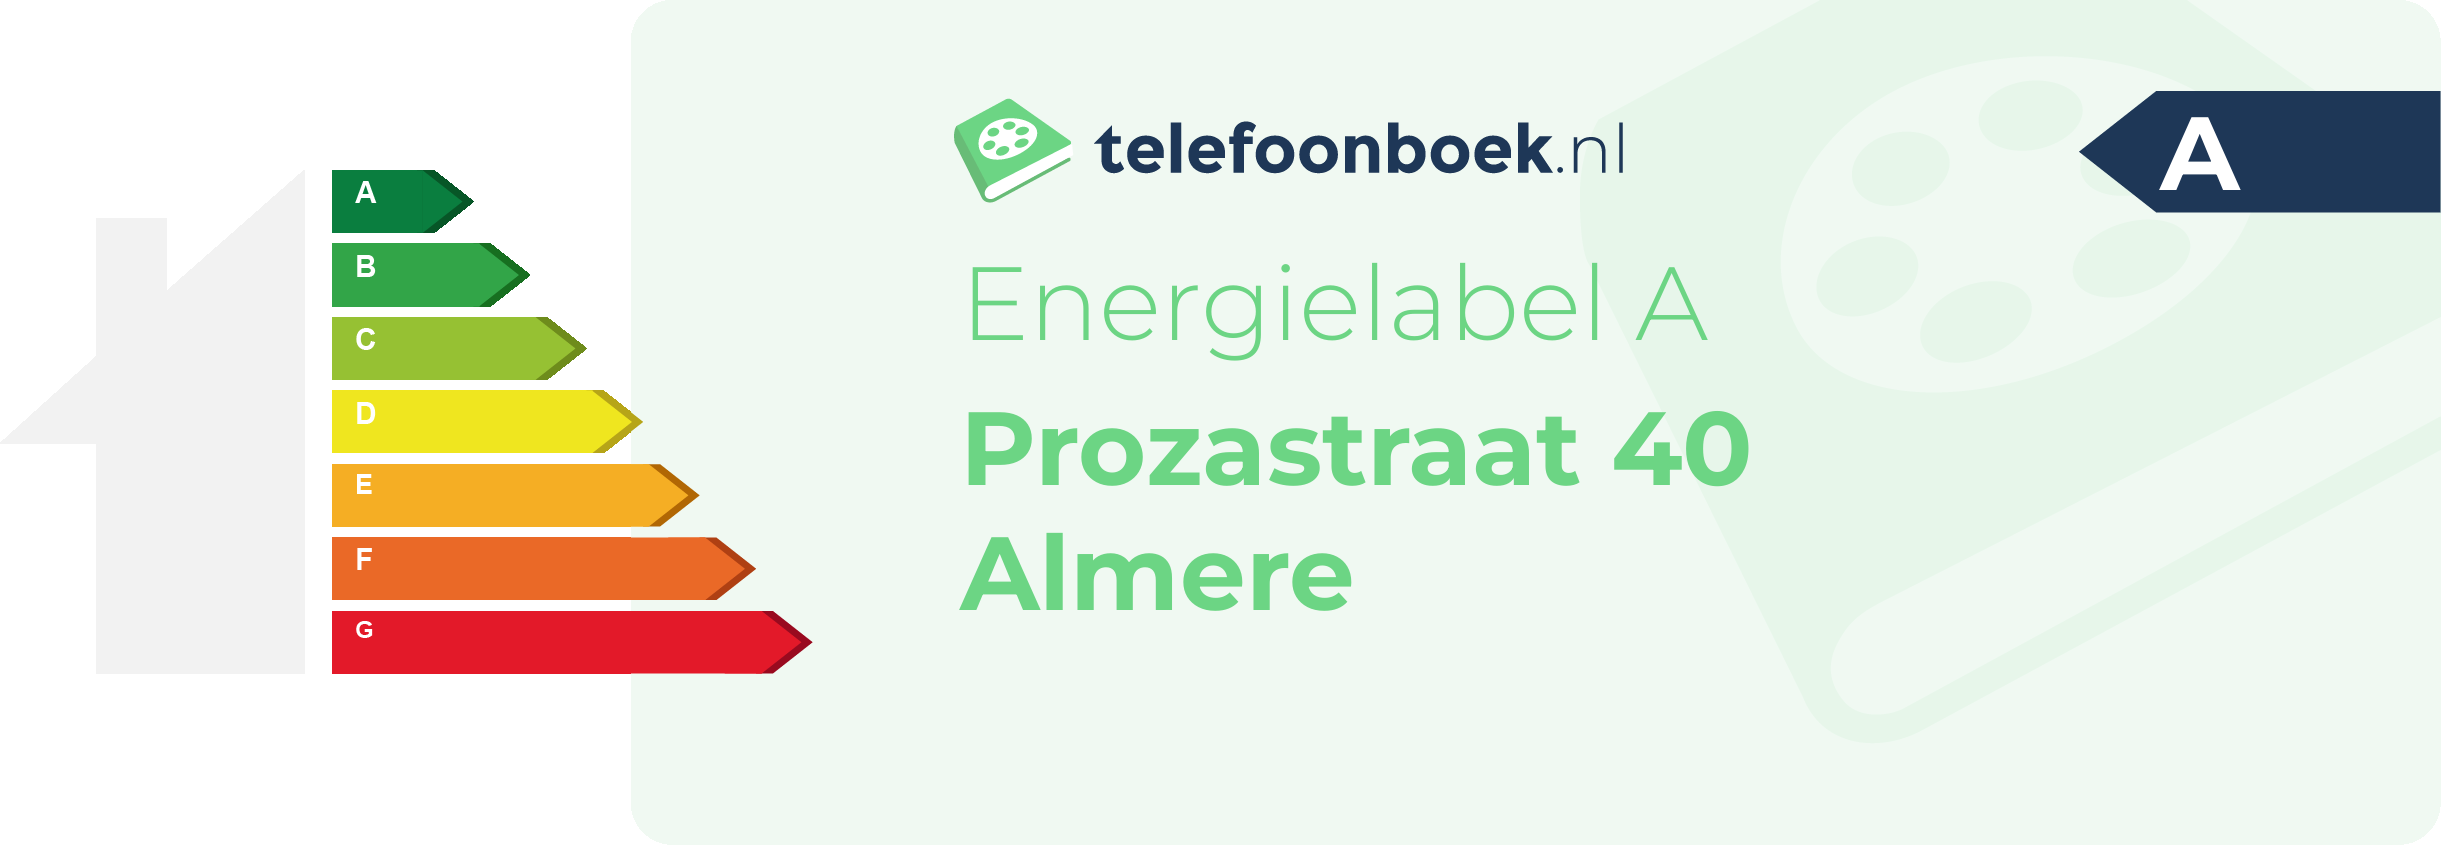 Energielabel Prozastraat 40 Almere